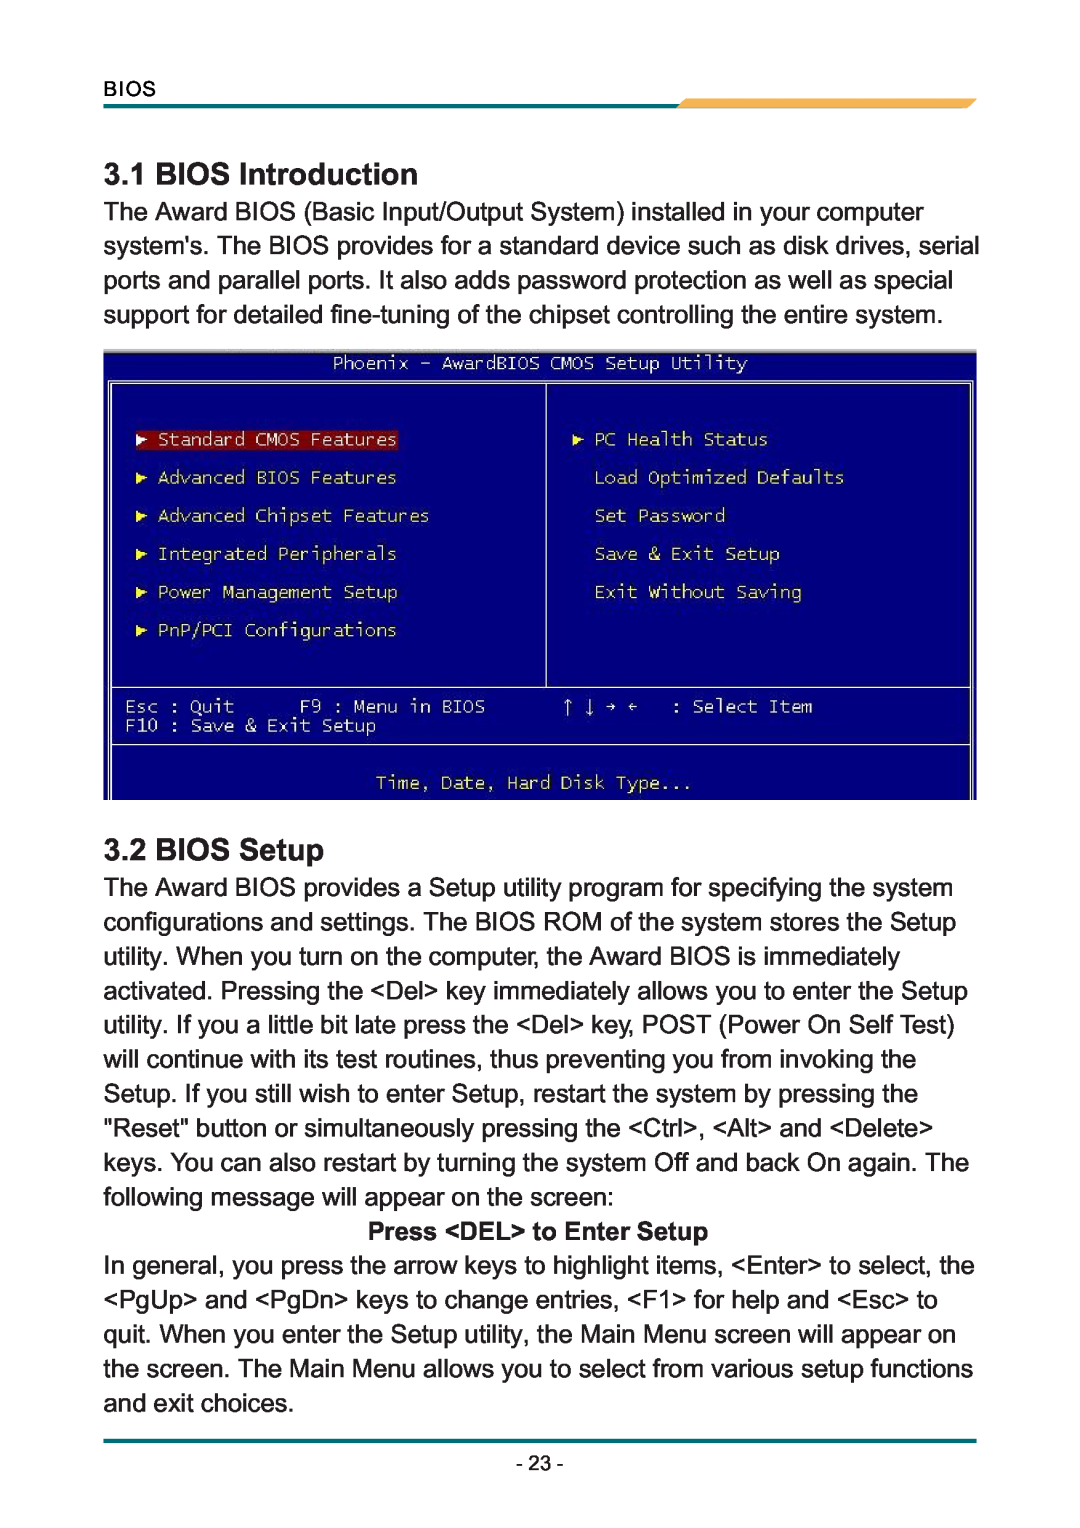 AMD SBX-5363 manual BIOS Introduction, BIOS Setup, Press DEL to Enter Setup 